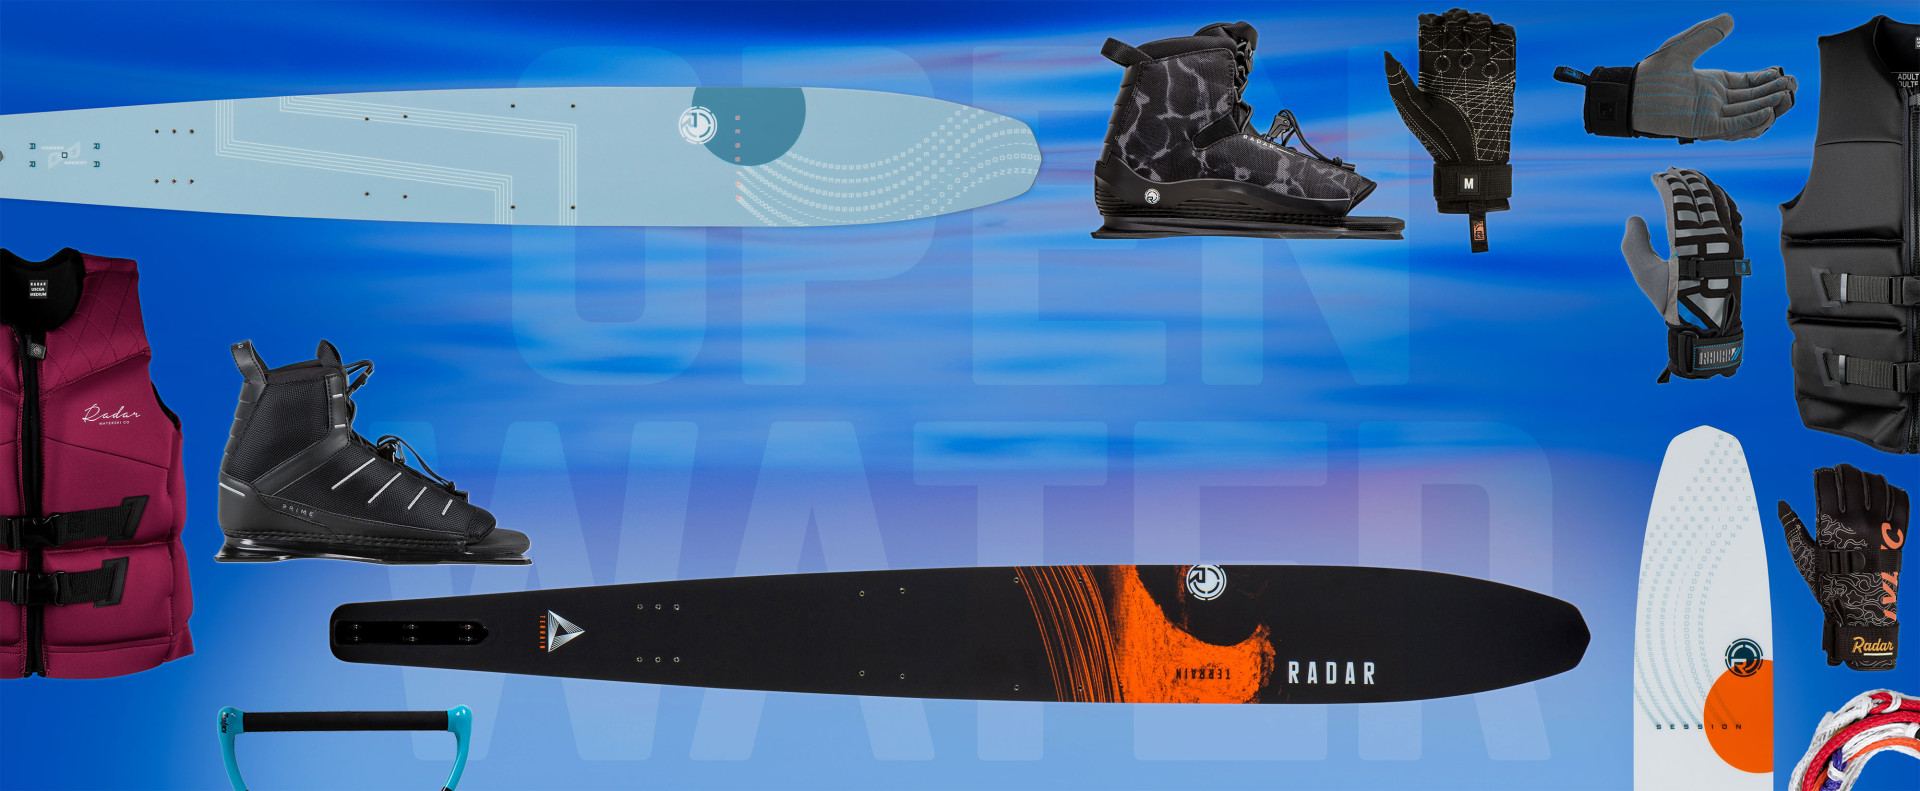 Vapor-K Boa  Radar Skis, Handcrafted Quality Waterskis